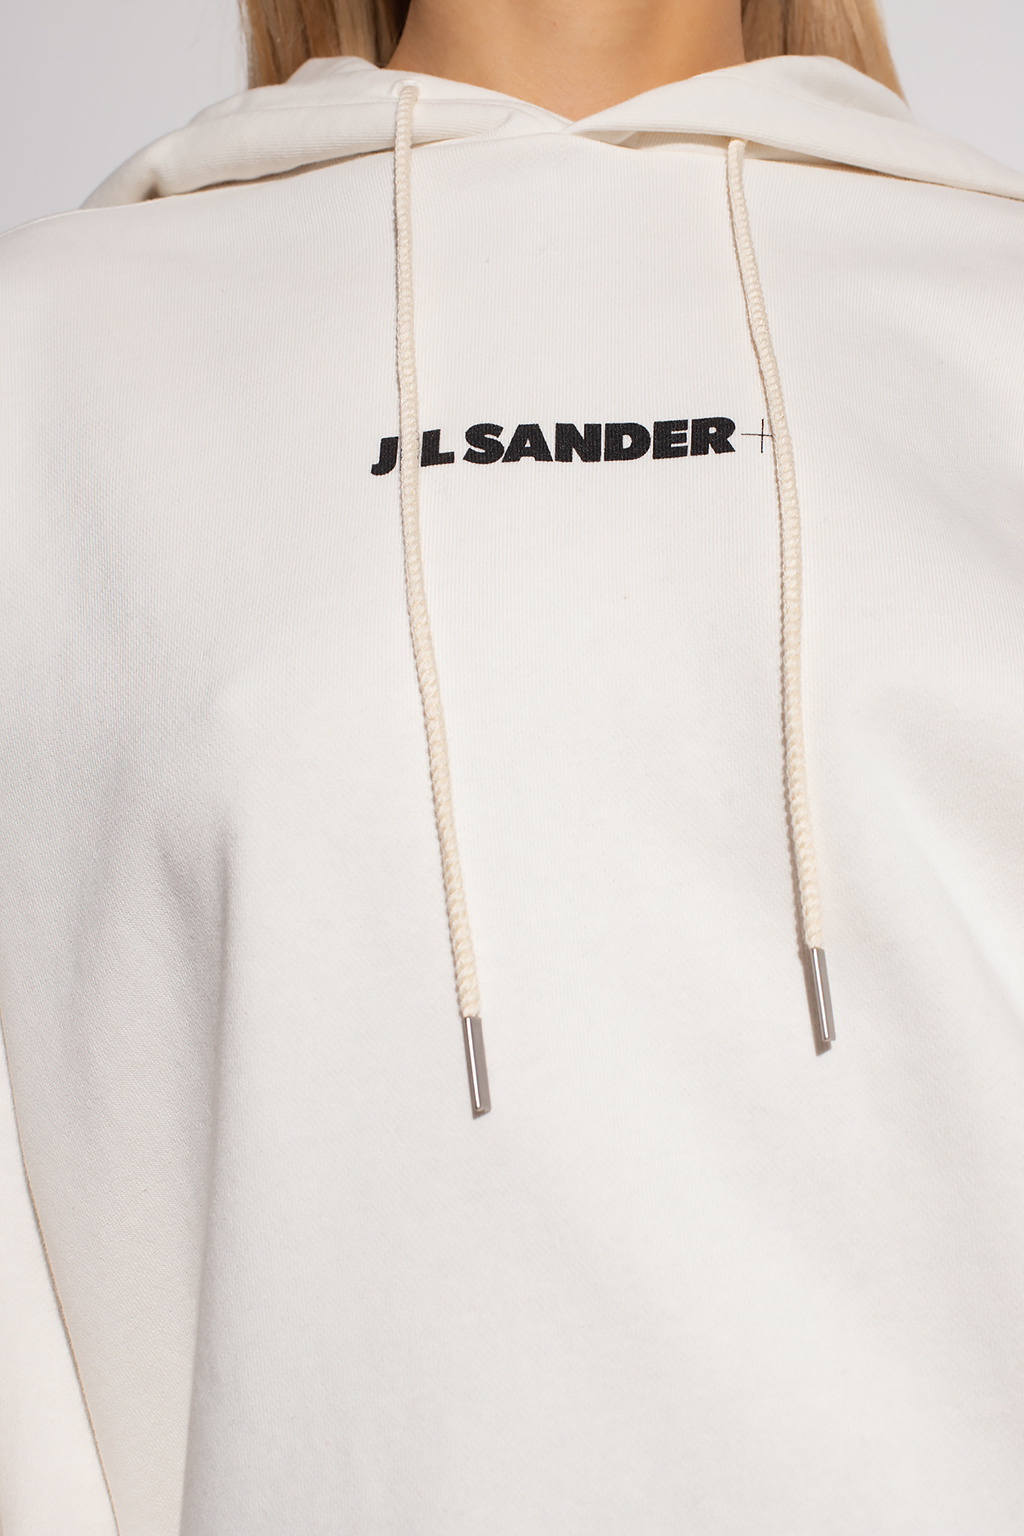 JIL SANDER+ Jil Sander logo-print leather coin purse